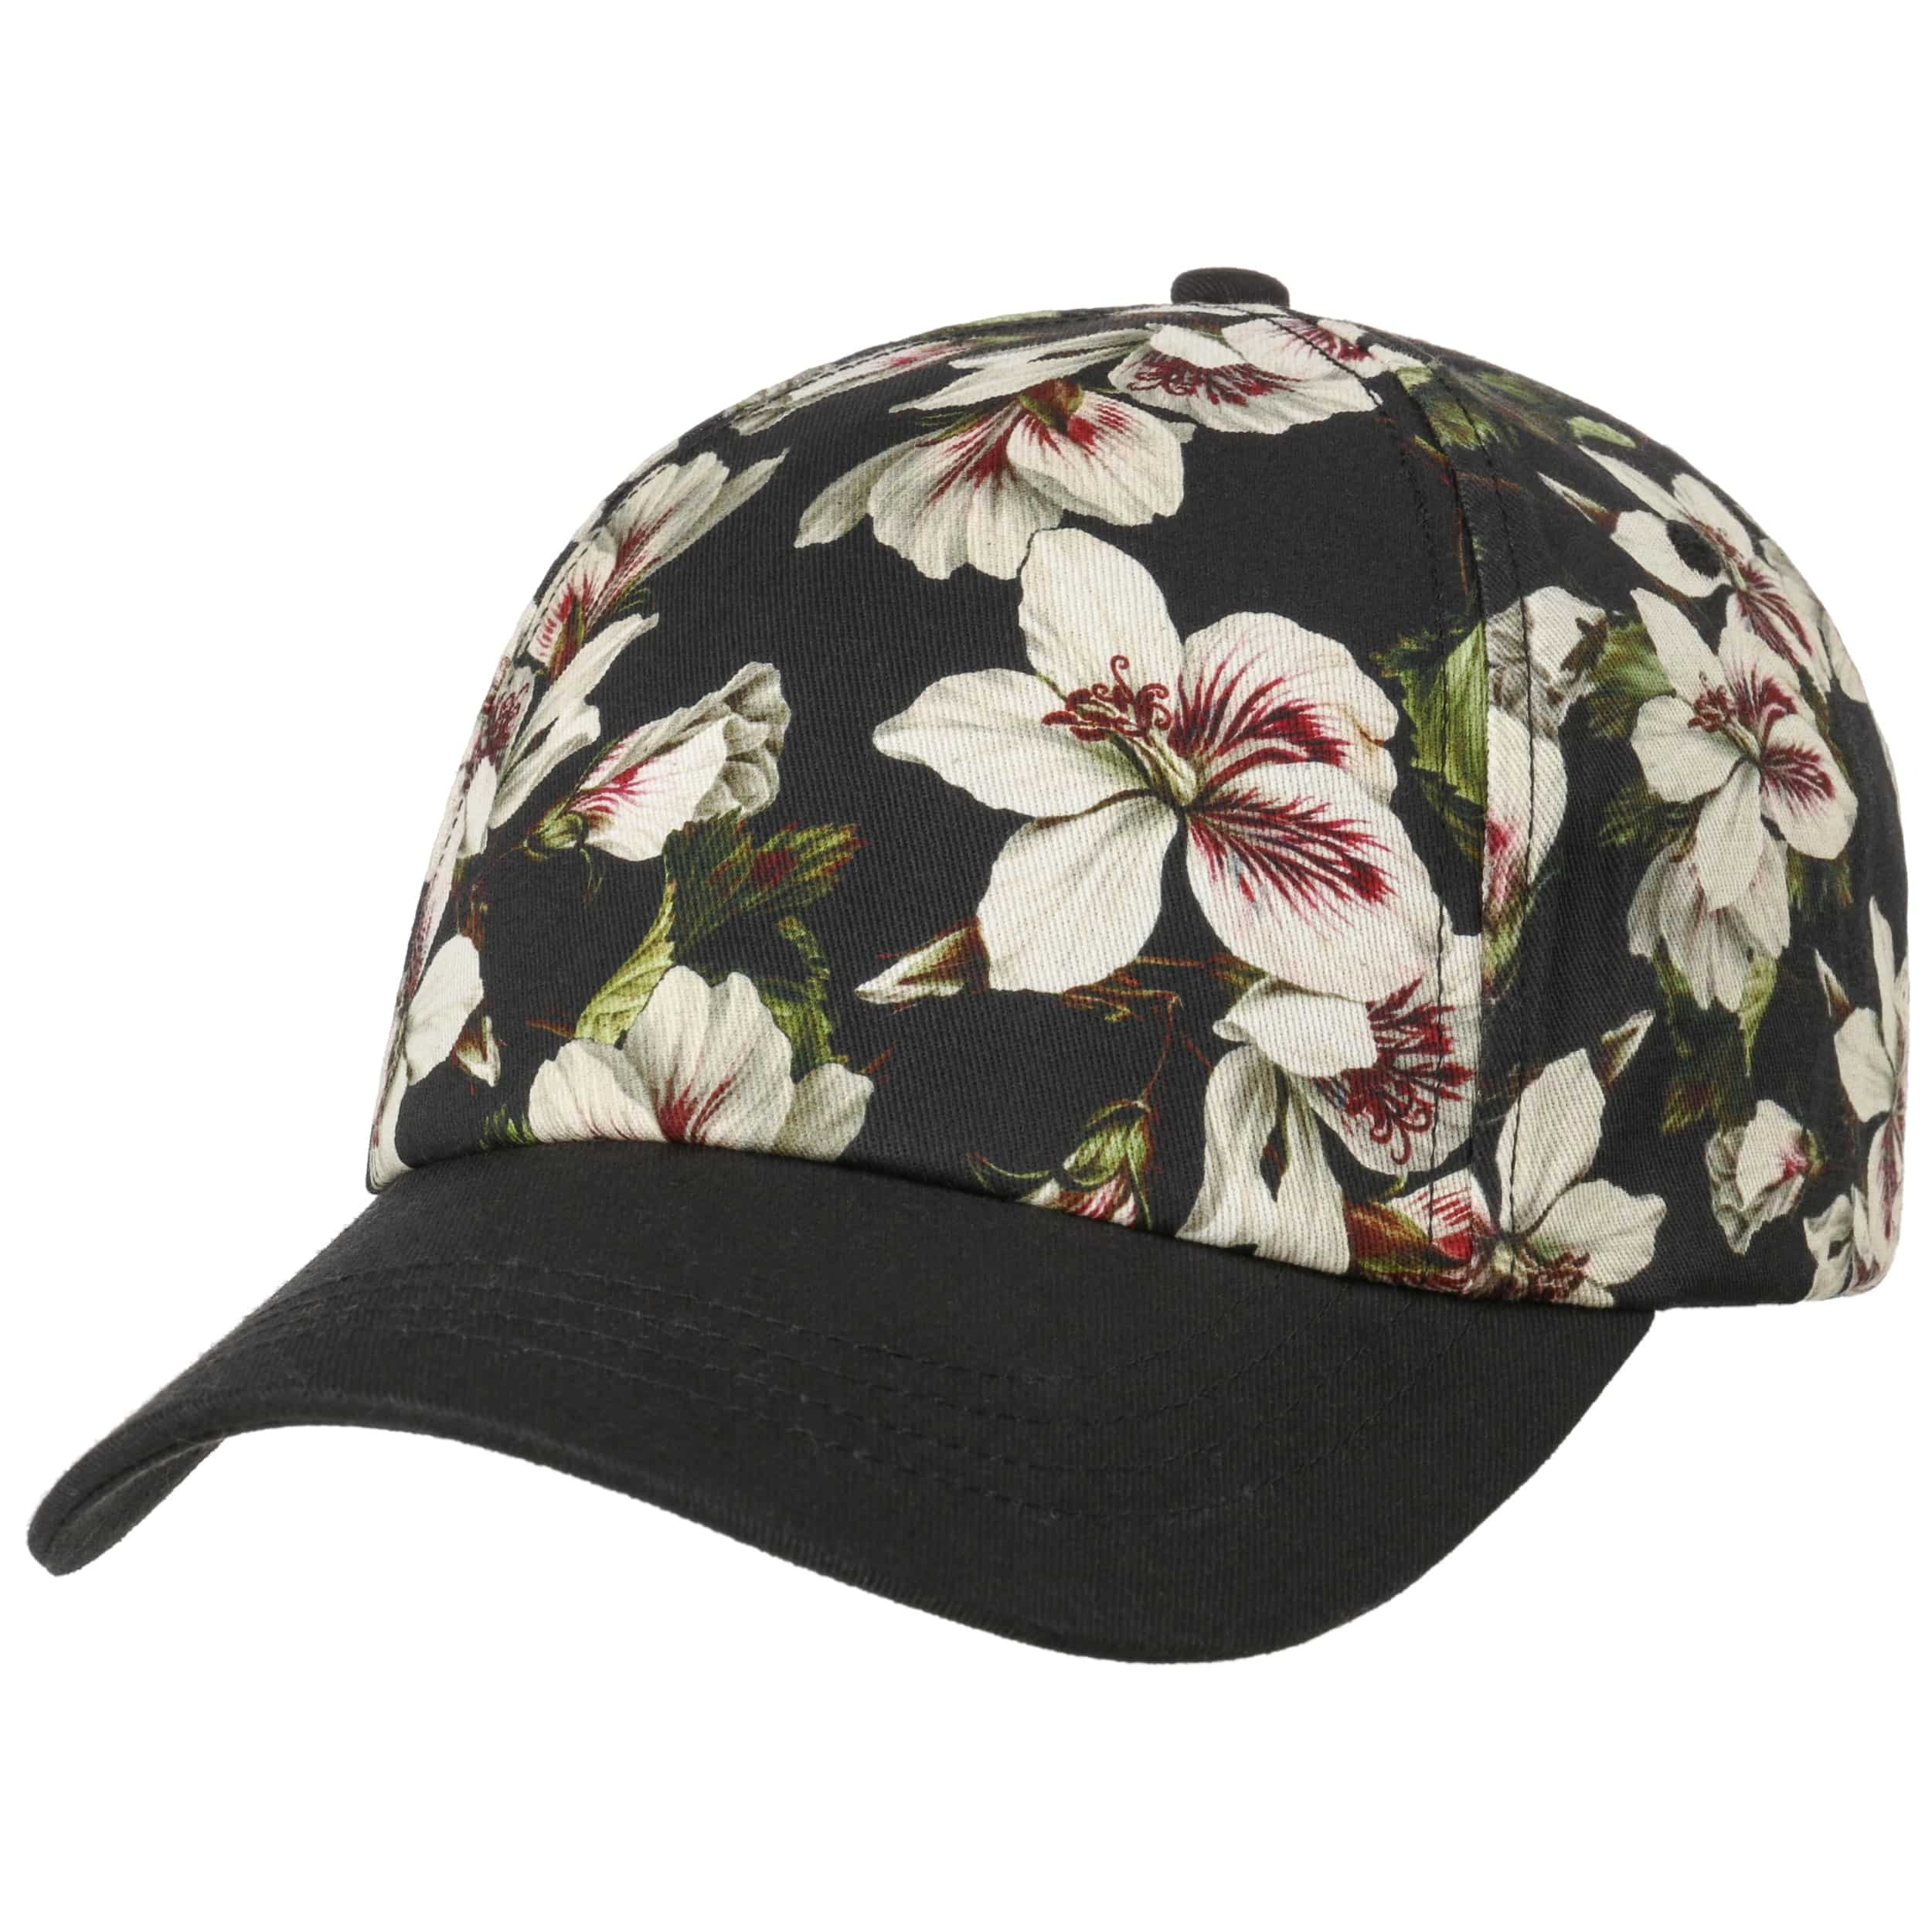 Roxy hat and cap discount 86% Multicolored Single WOMEN FASHION Accessories Hat and cap Multicolored 